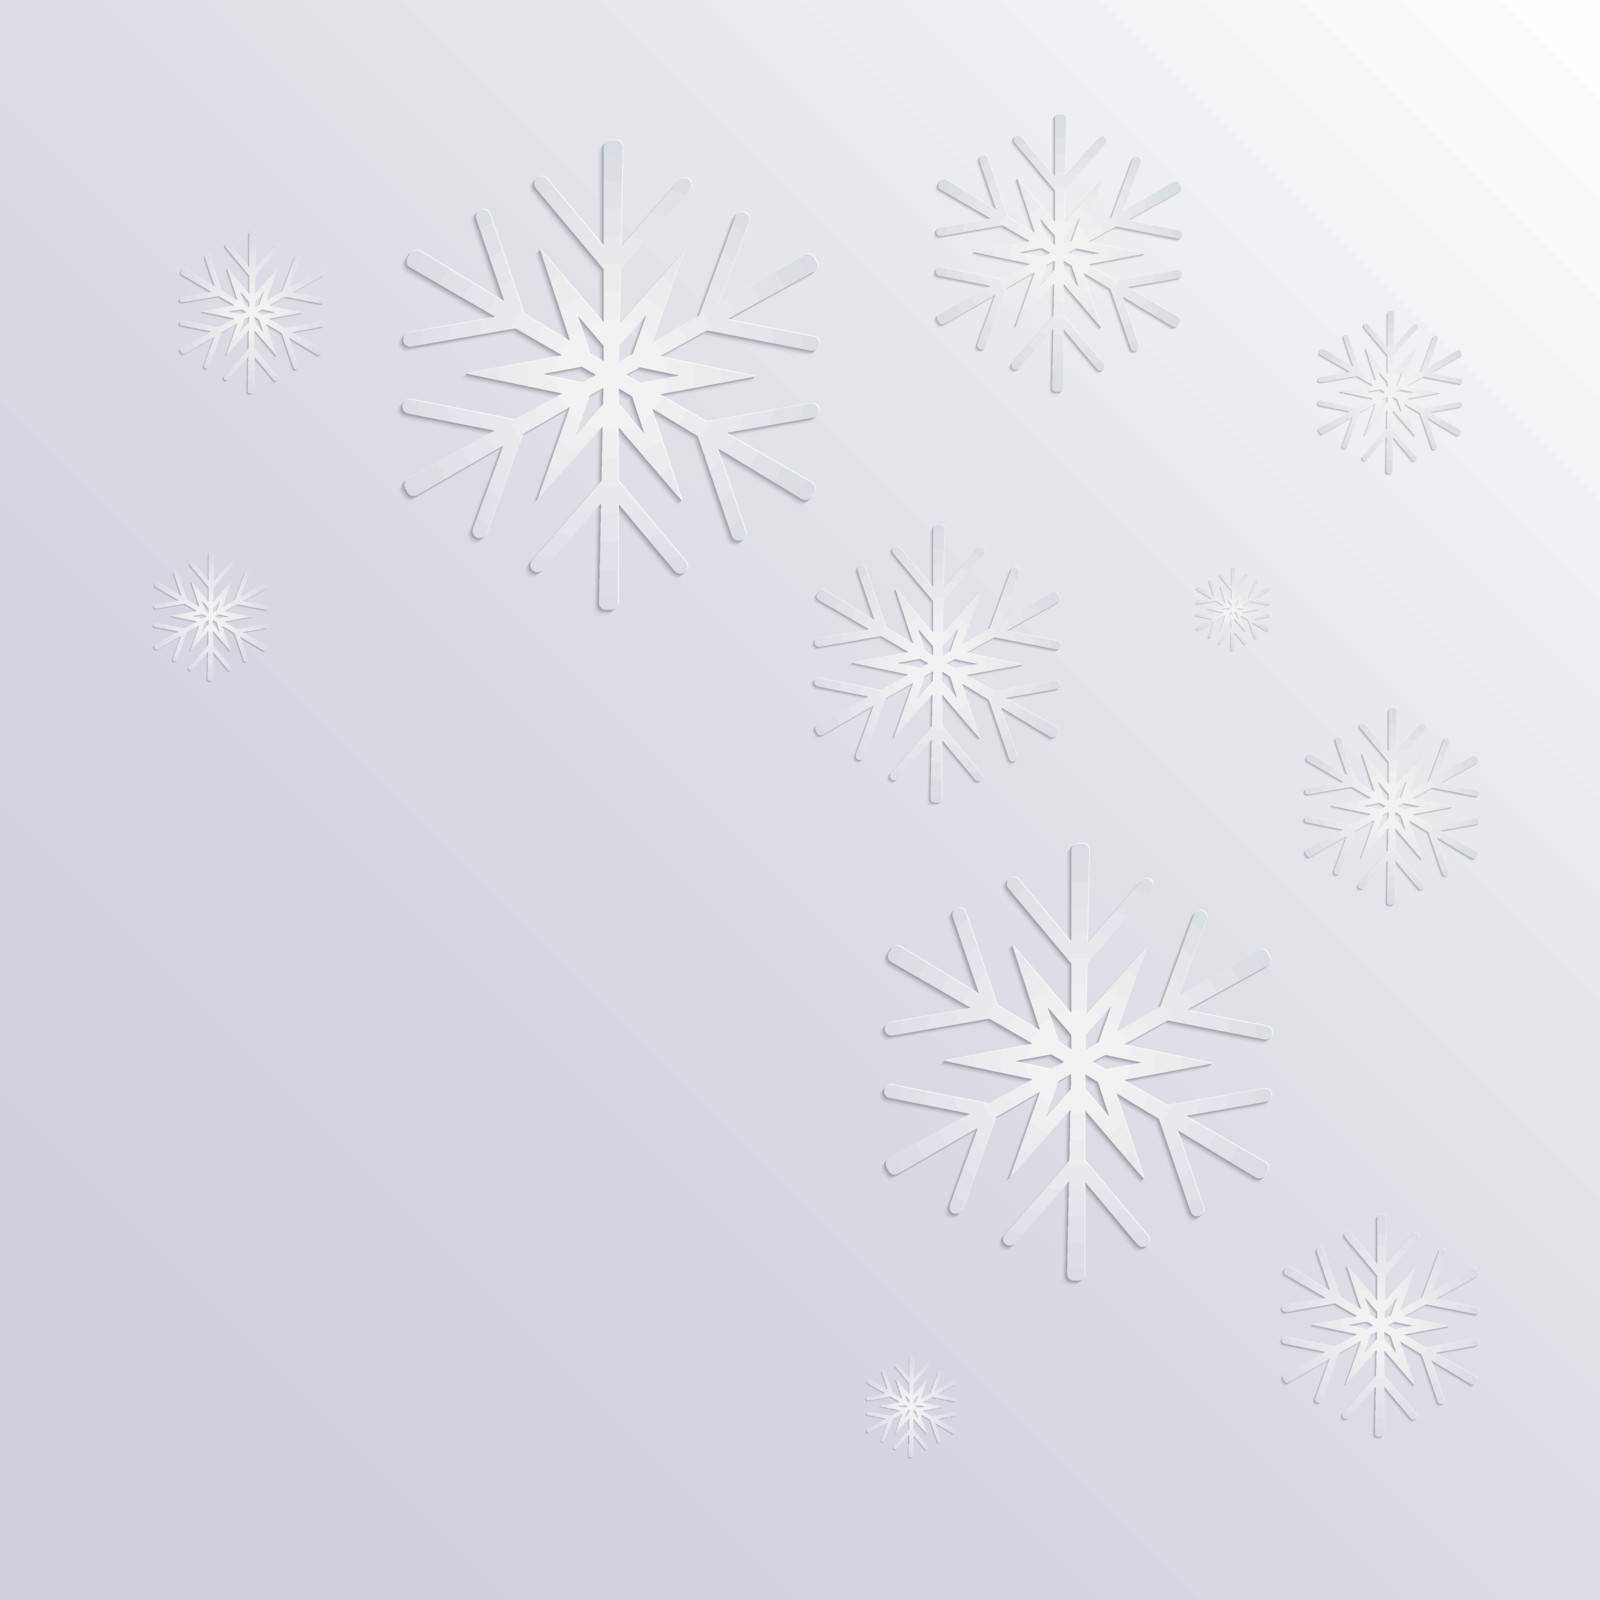 Snowflake Vectors by Zhukow